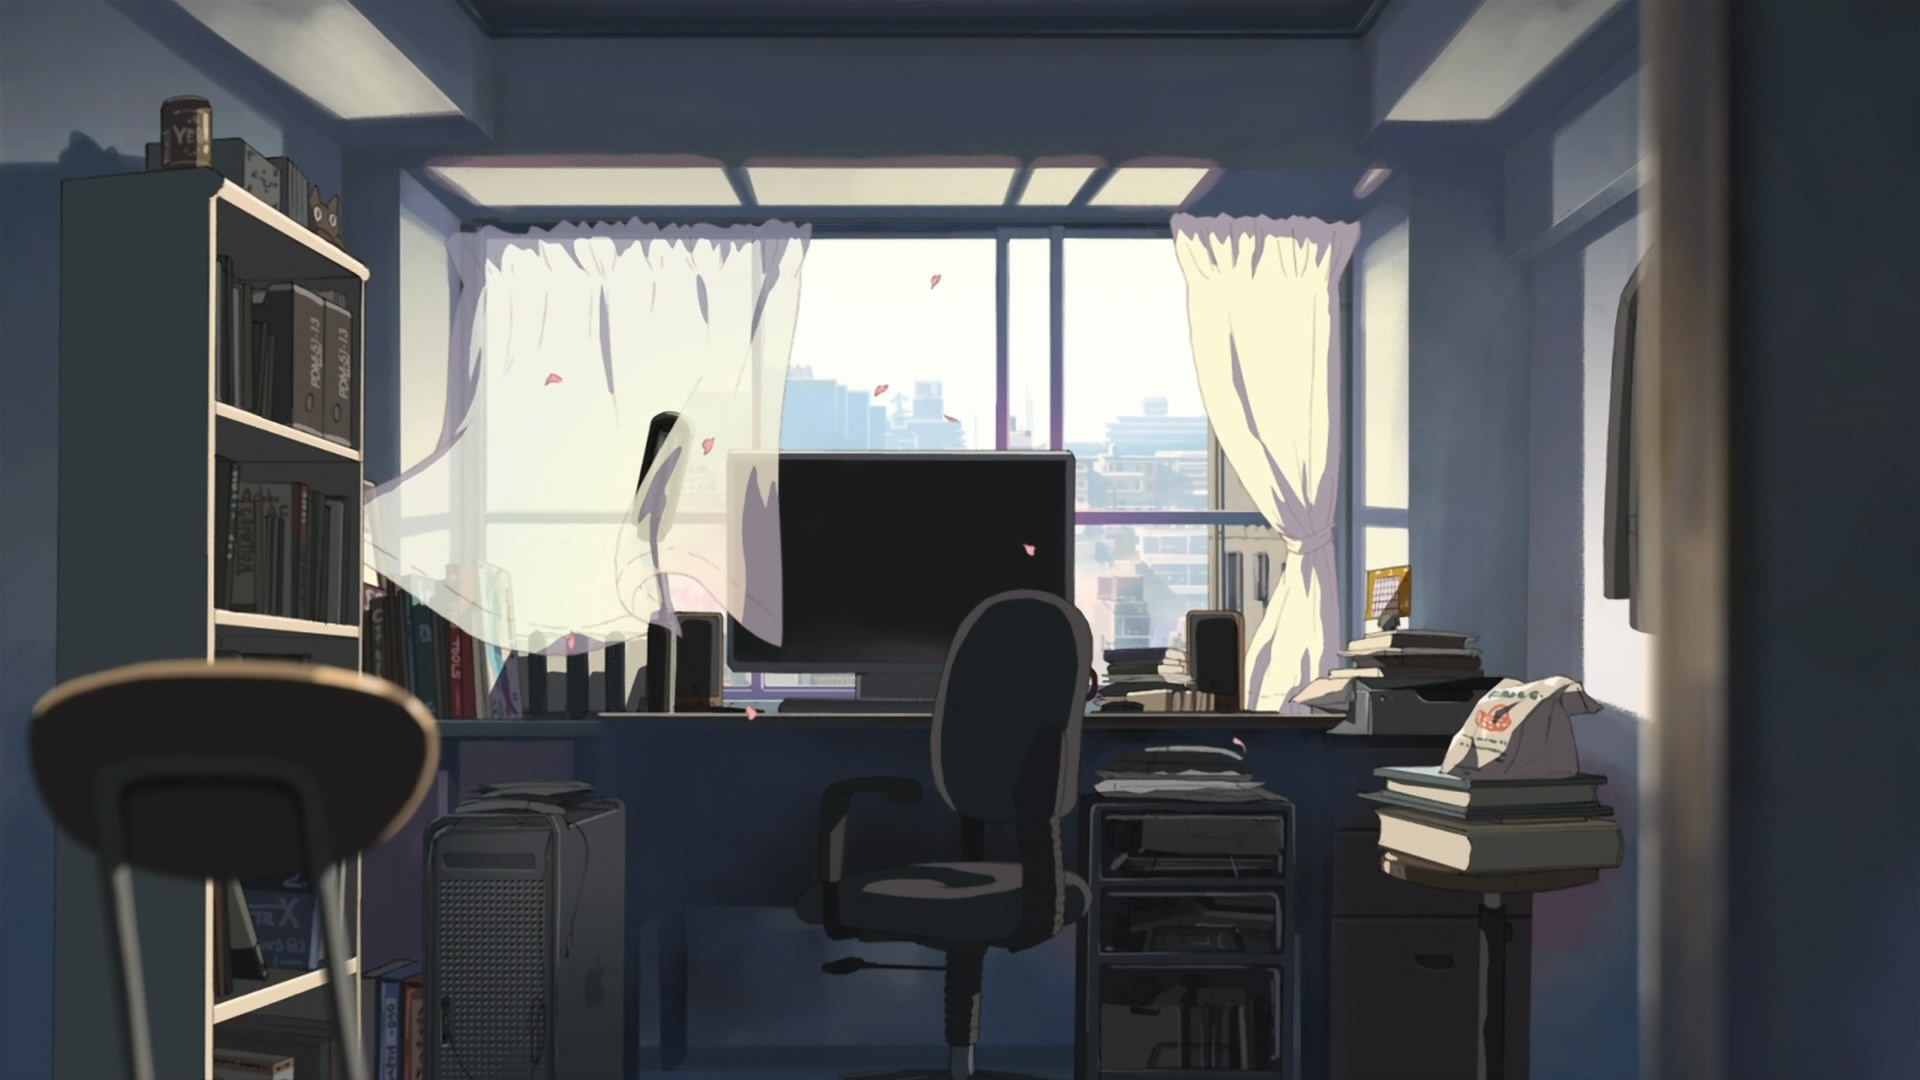 anime room wallpaper,room,property,building,furniture,interior design